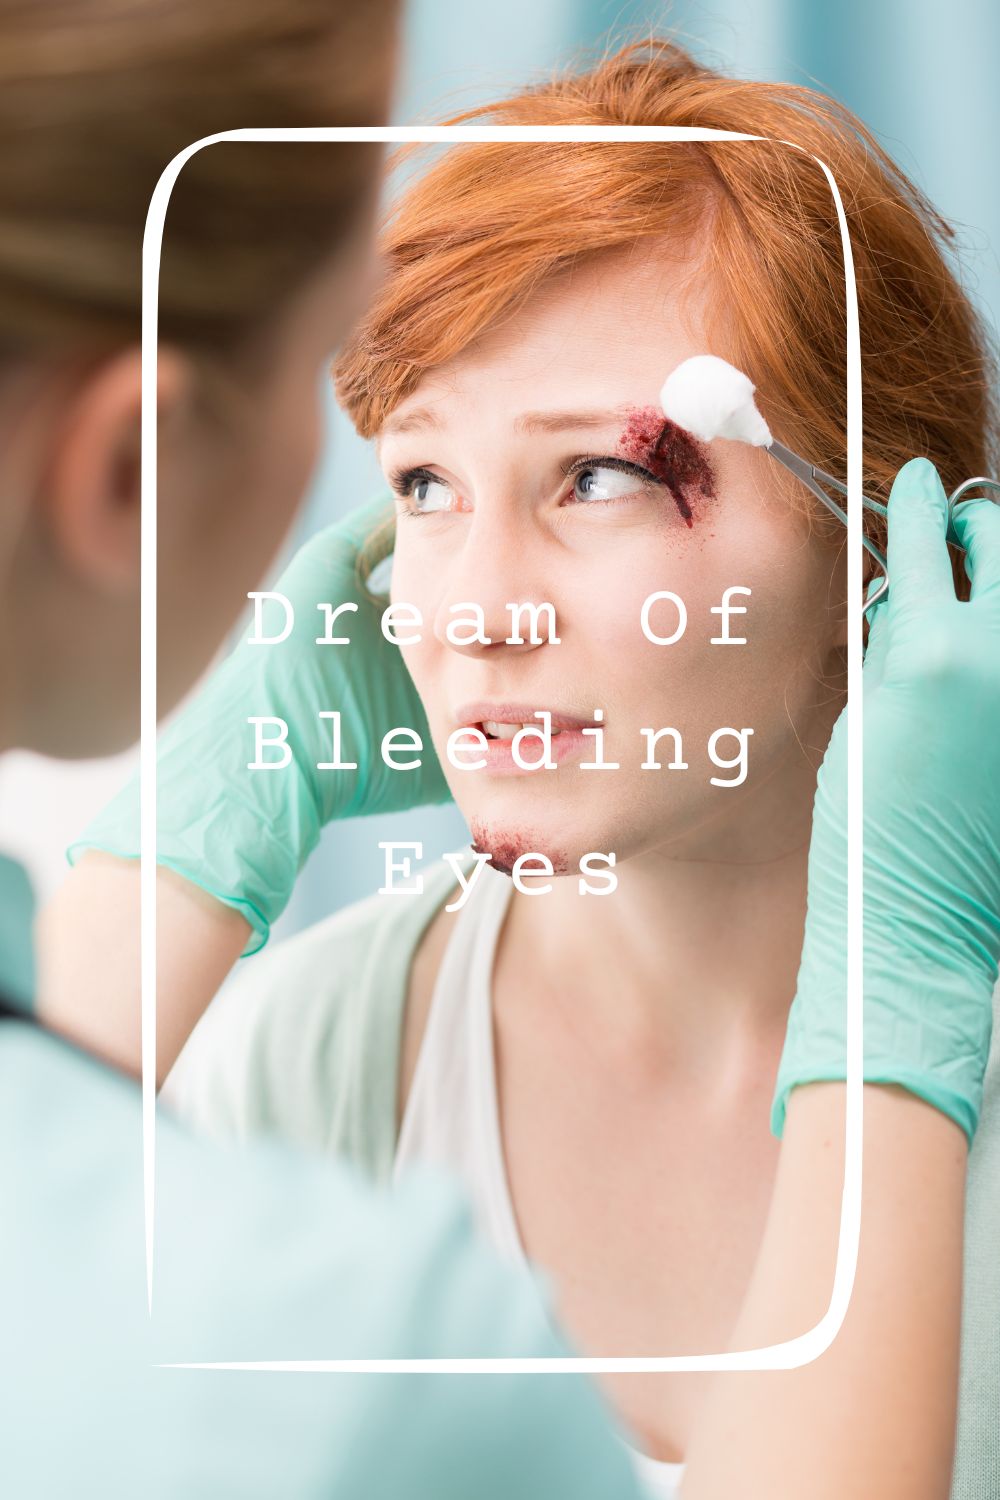 Dream Of Bleeding Eyes Meanings 2